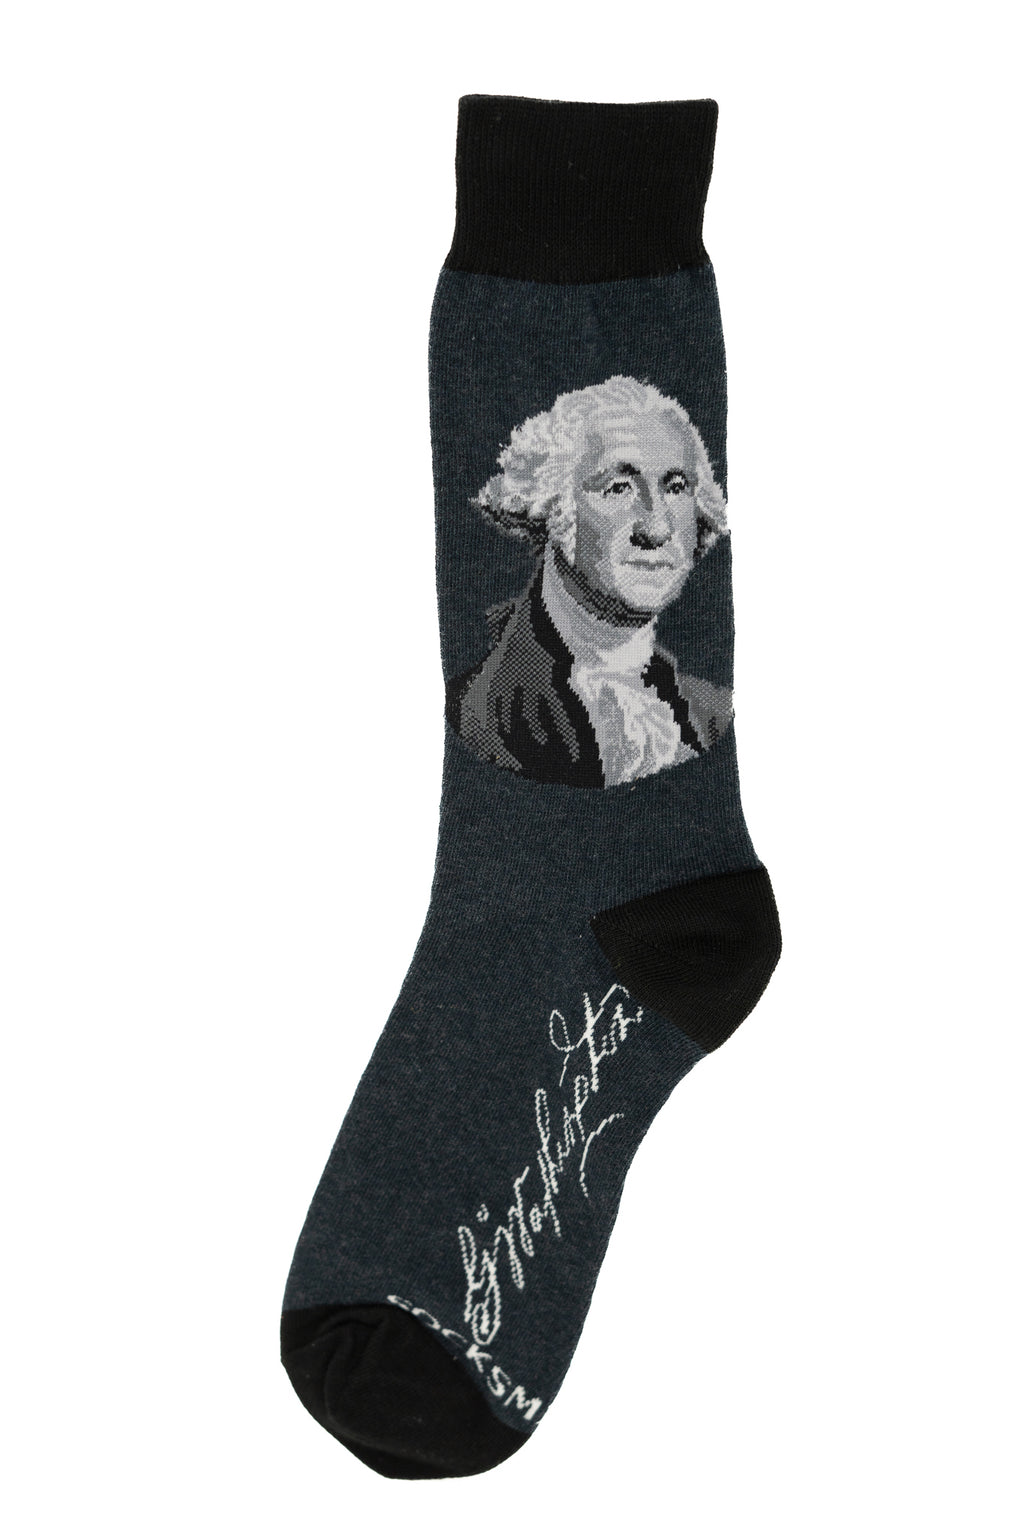 George Washington Portrait Socks